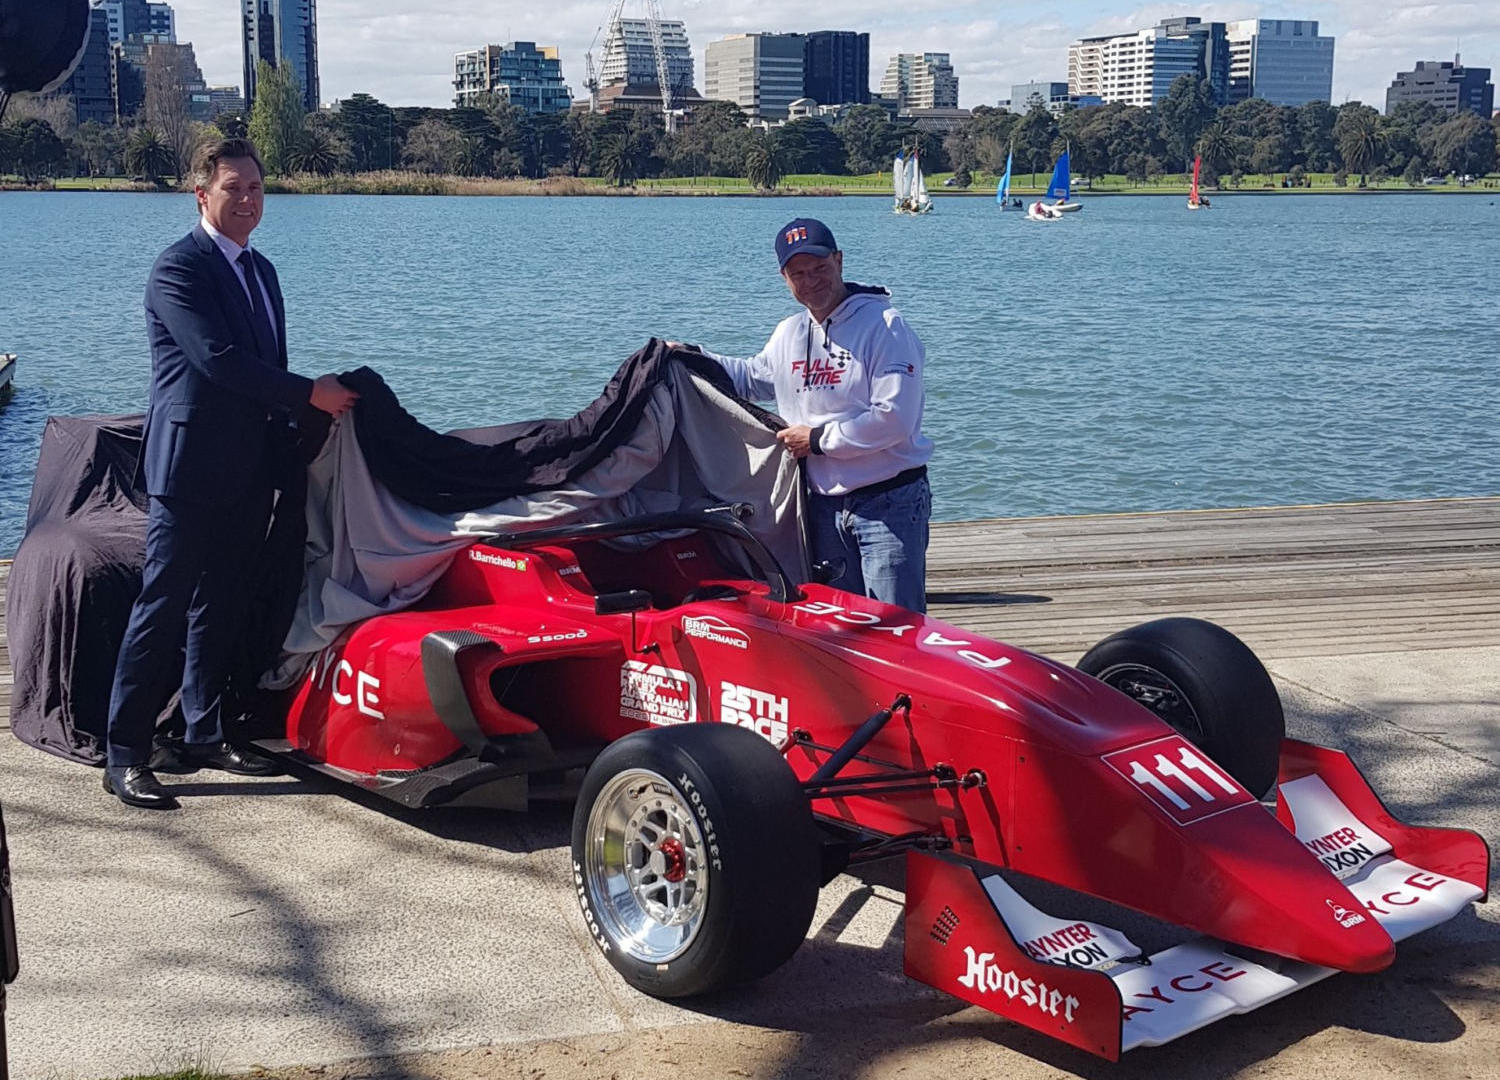 S5000 joins the Australian Grand Prix support program